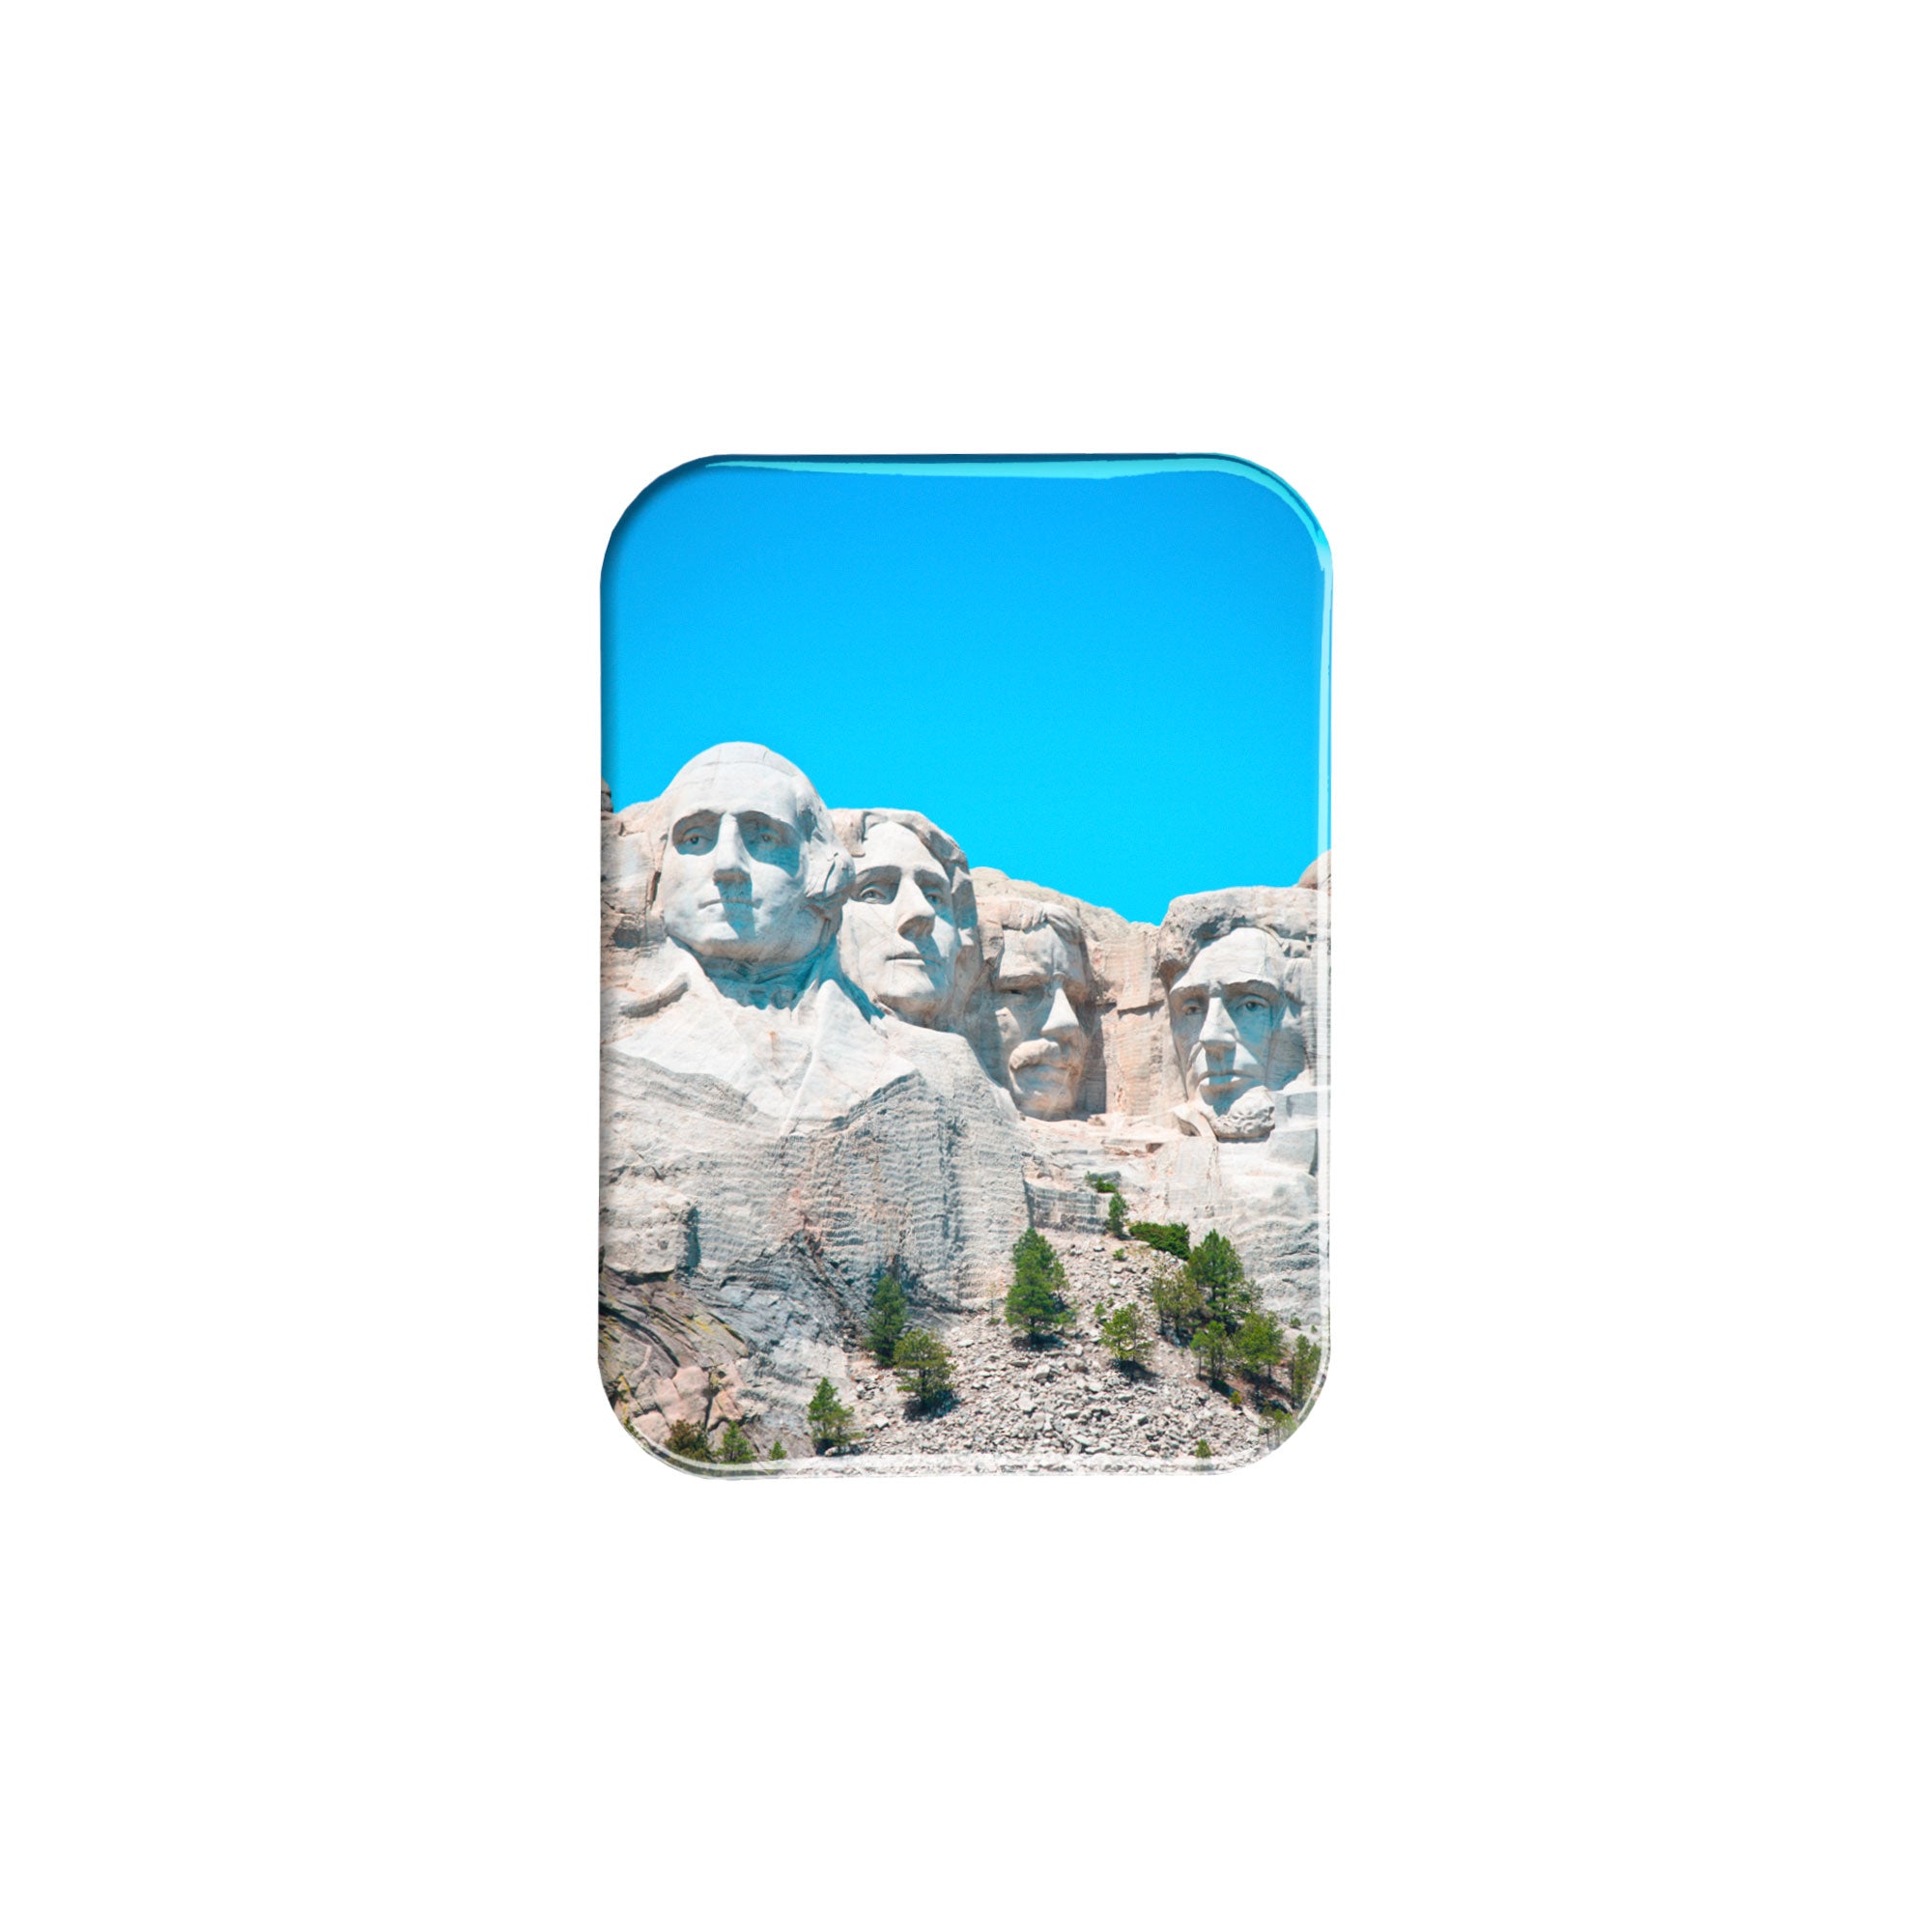 "Mount Rushmore Portrait" - 2.5" X 3.5" Rectangle Fridge Magnets